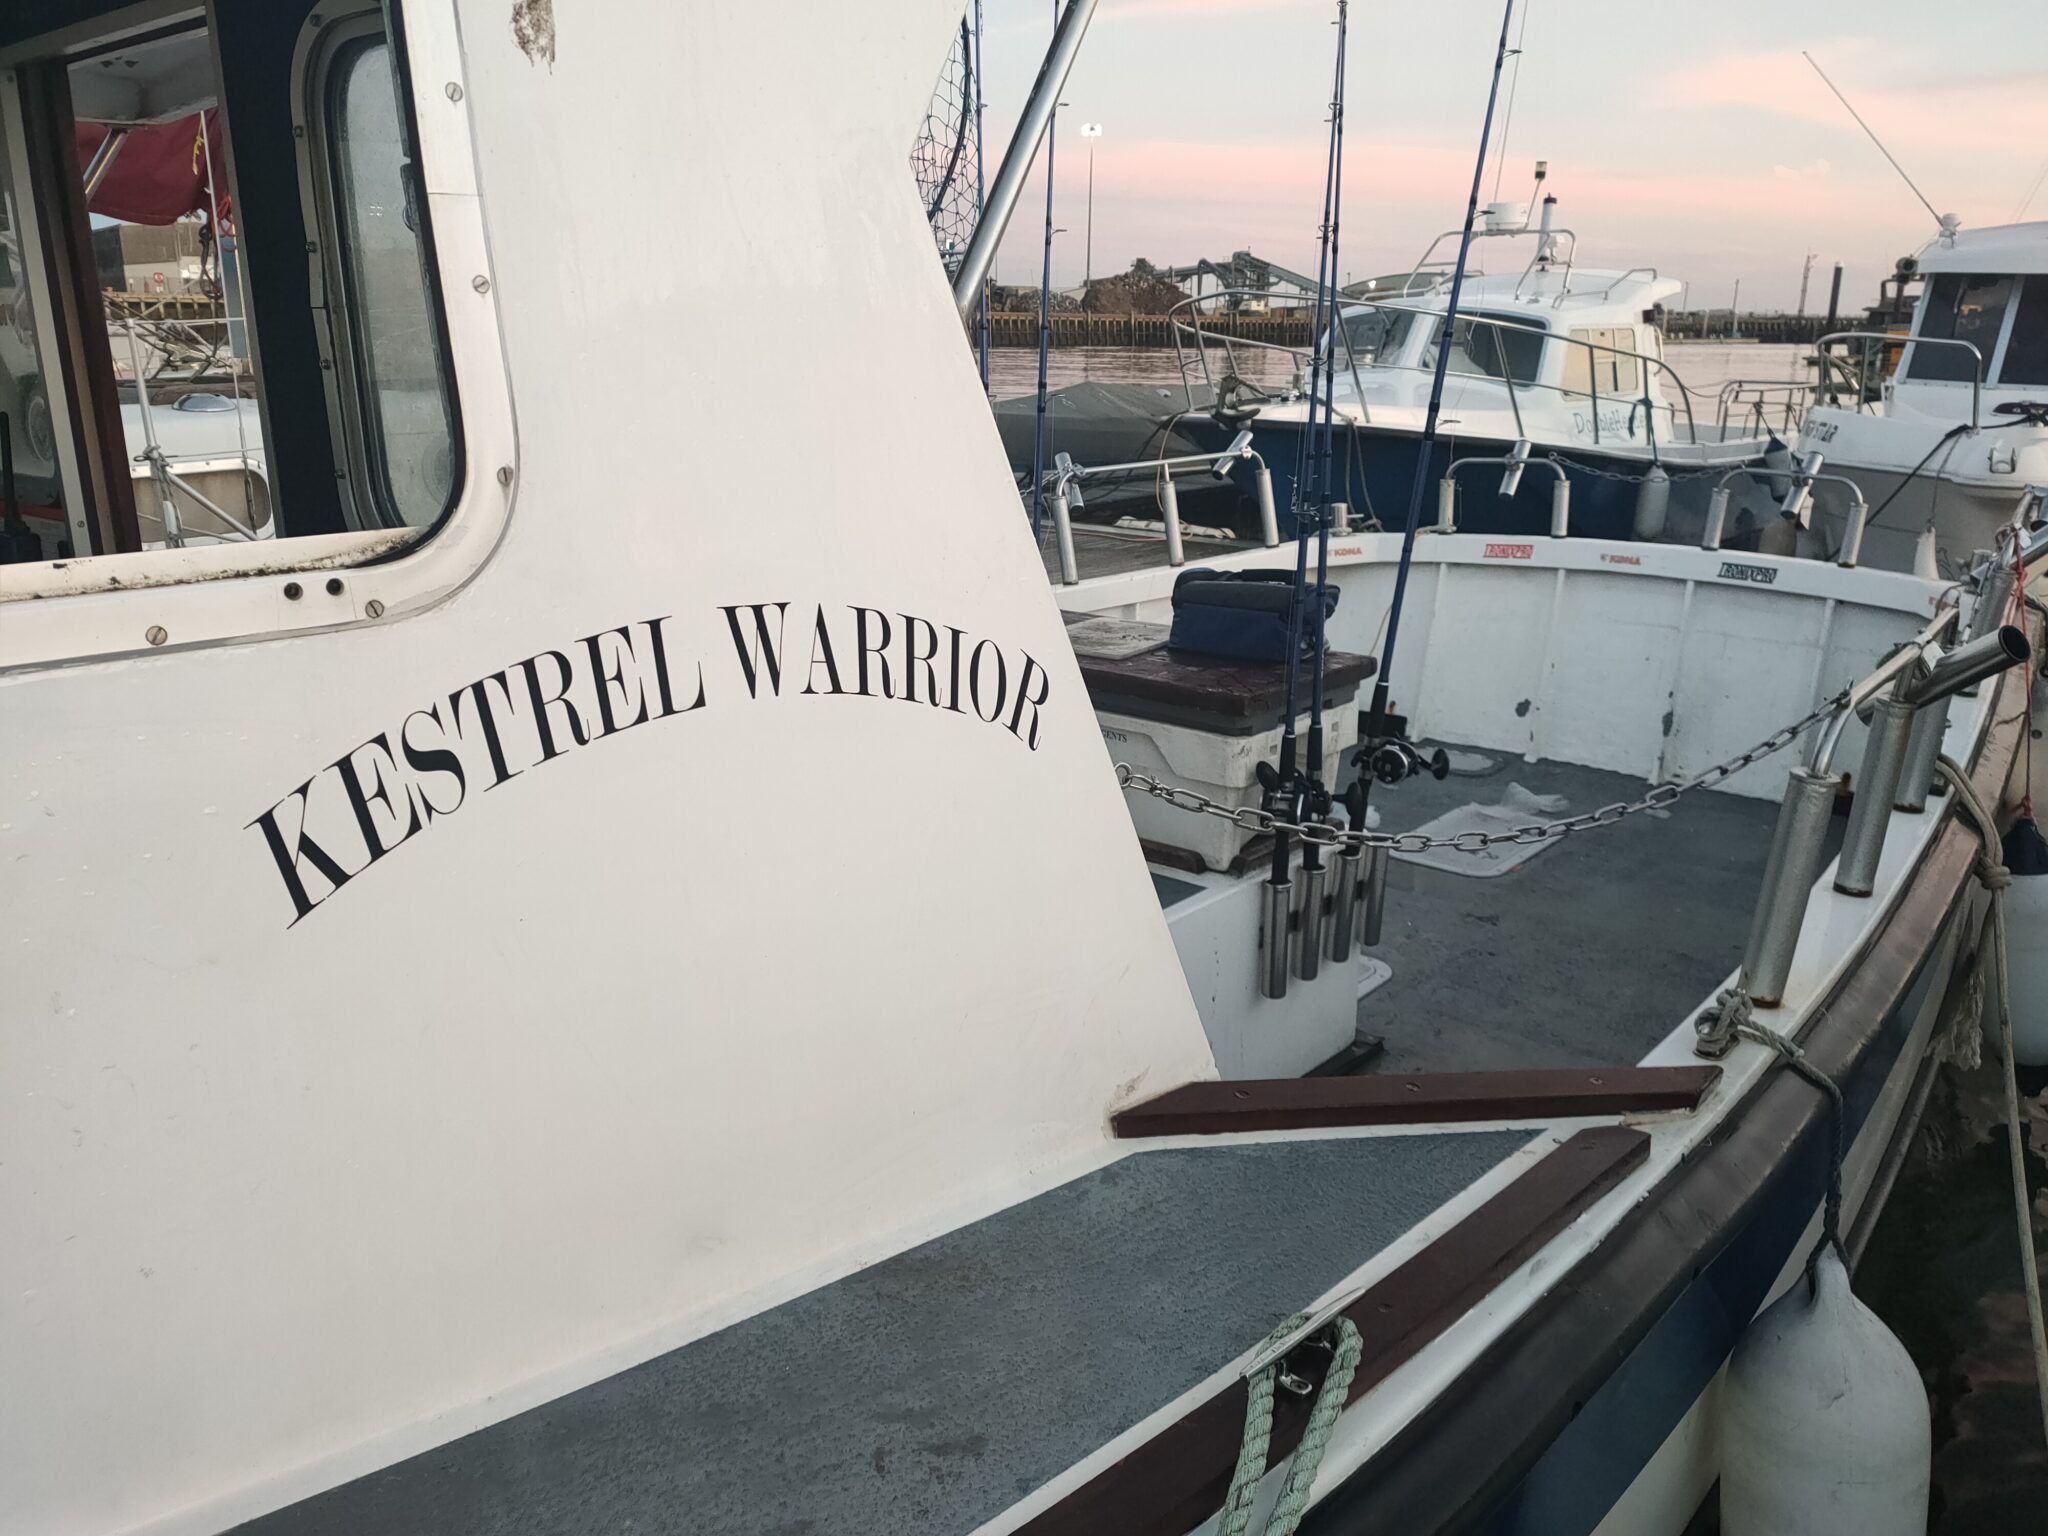 mackerel fishing trips brighton